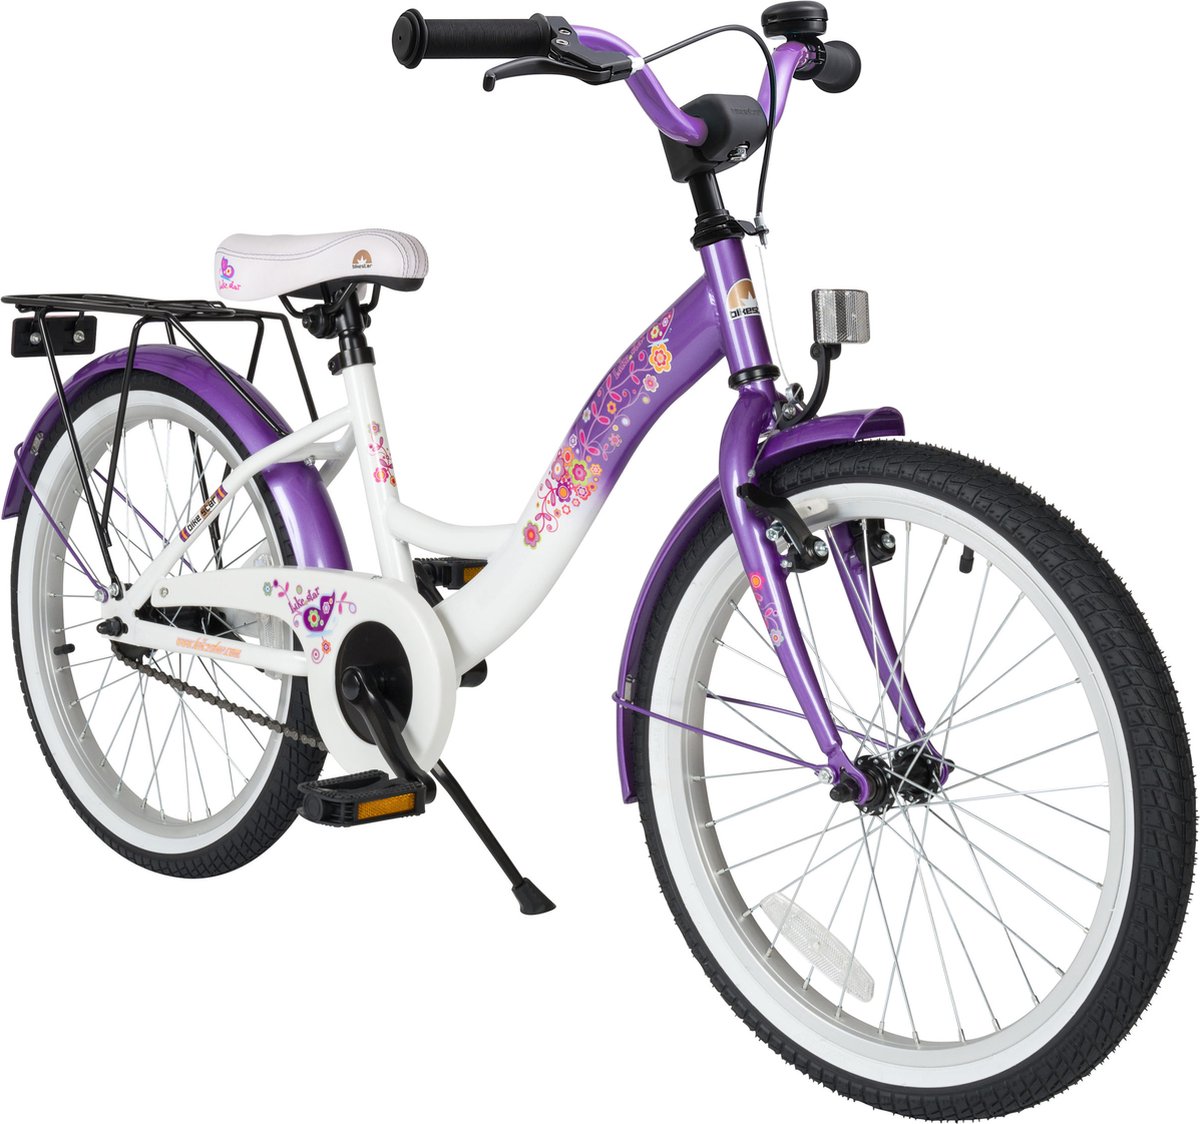 Bikestar 20 inch Classic kinderfiets lila wit